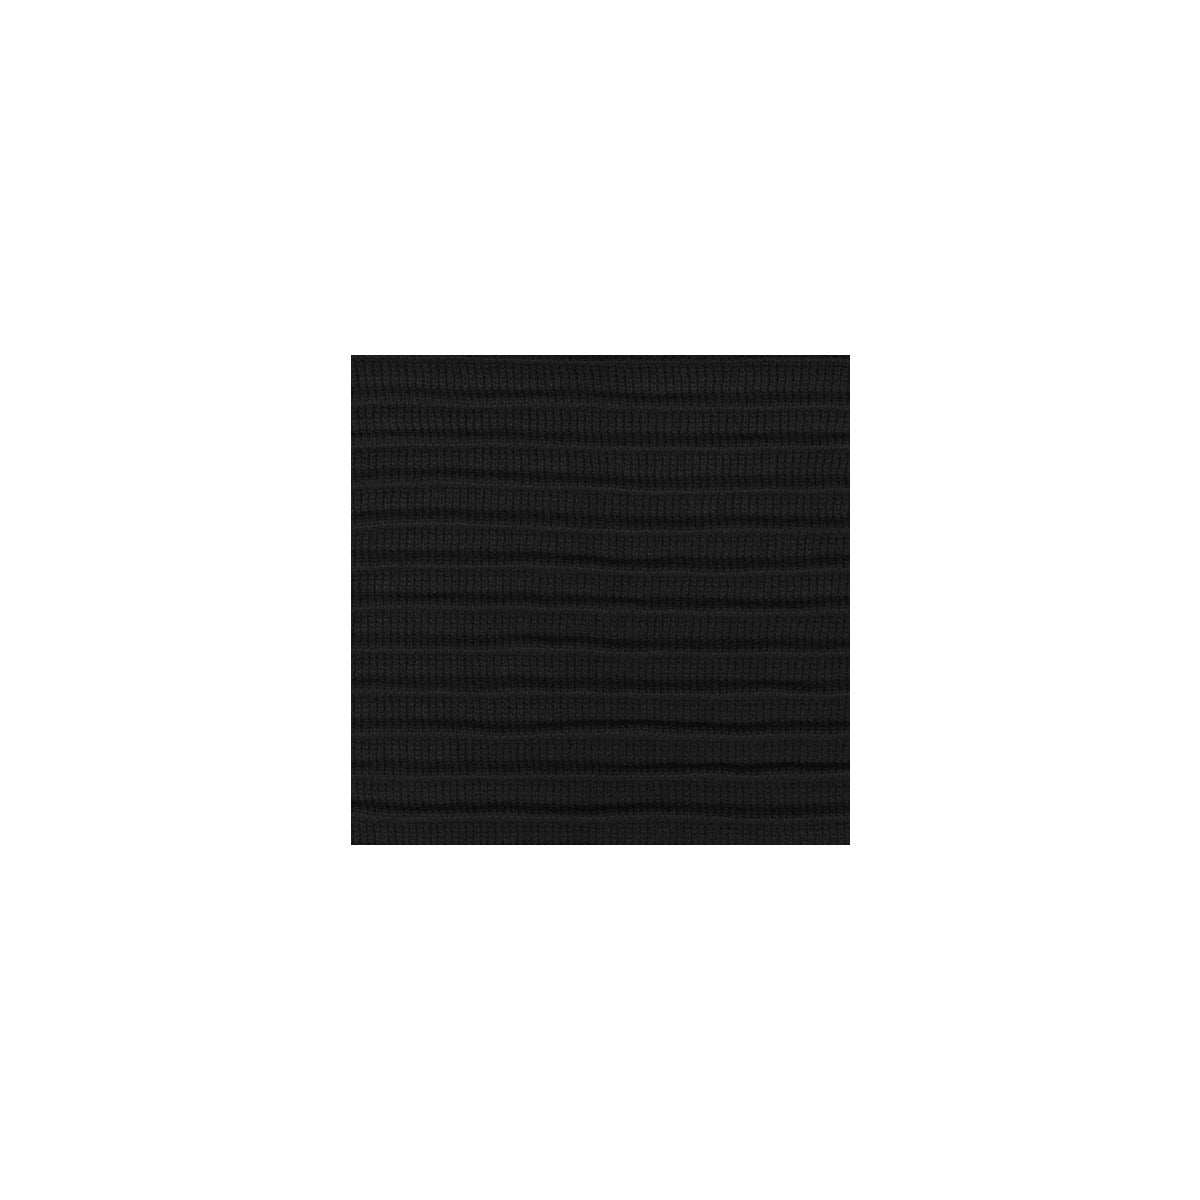 Pleated Knit - Black - SWATCH - 4"x 8"